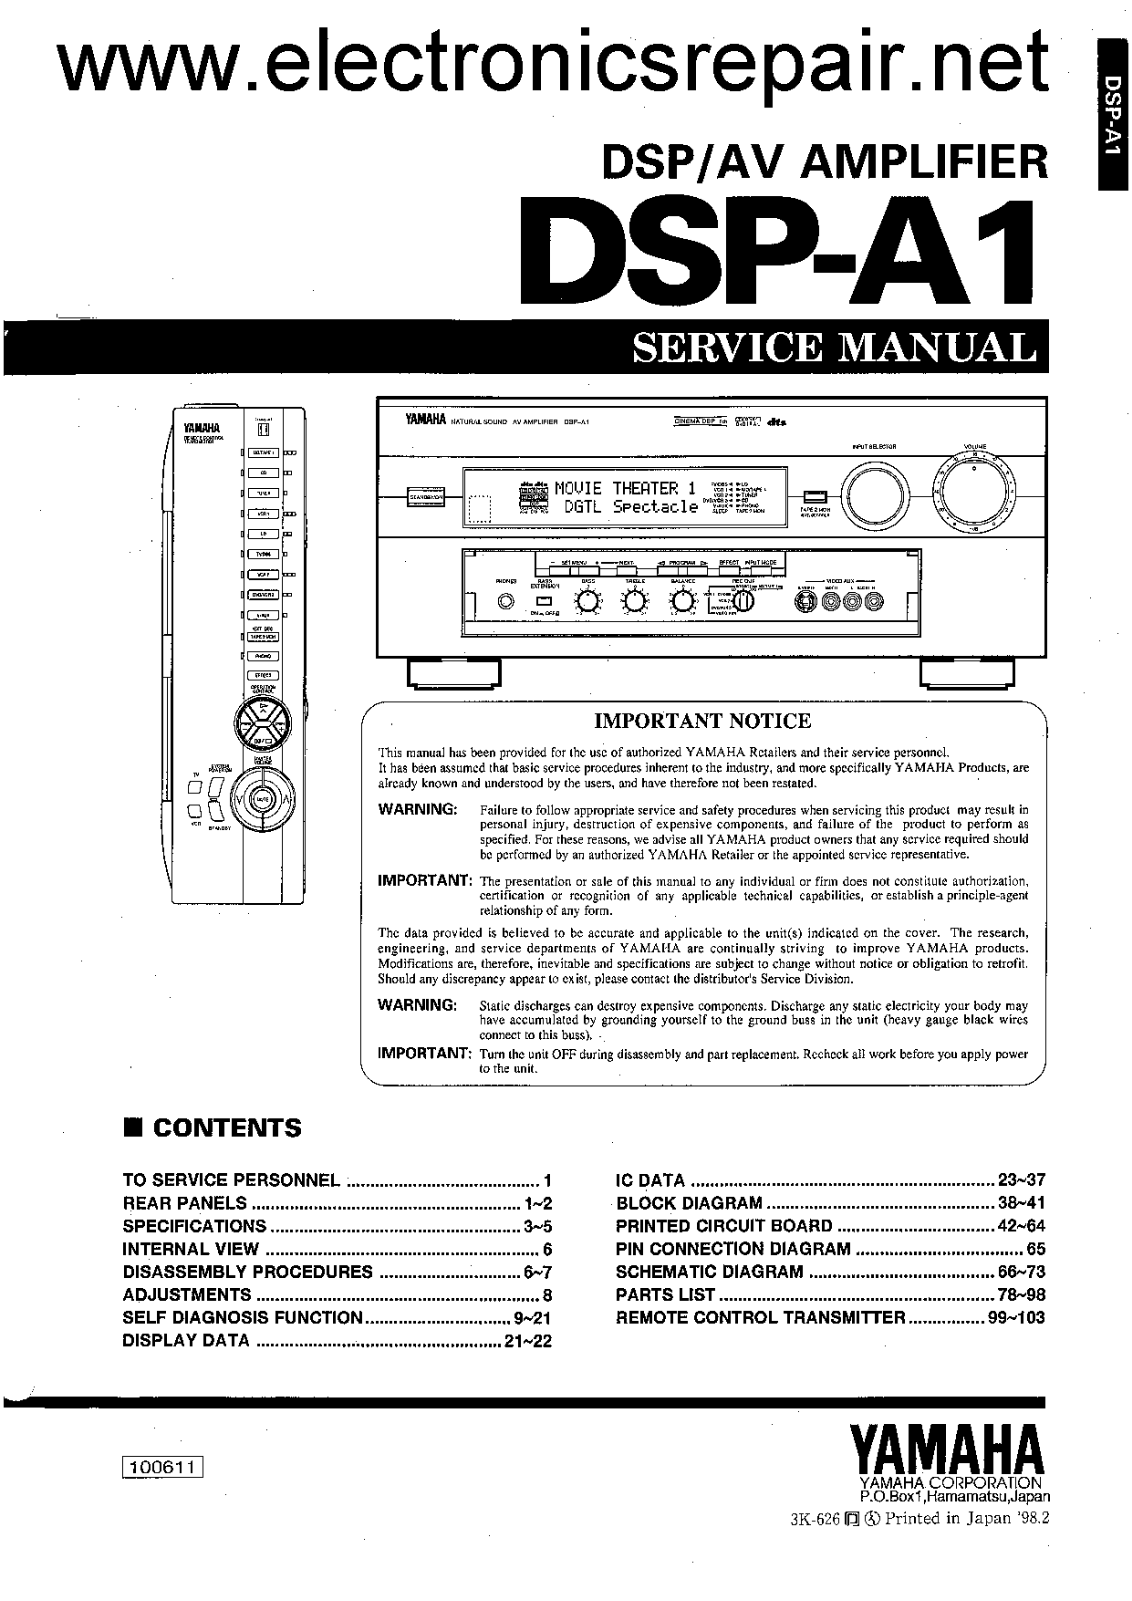 Yamaha DSPA-1 Service manual